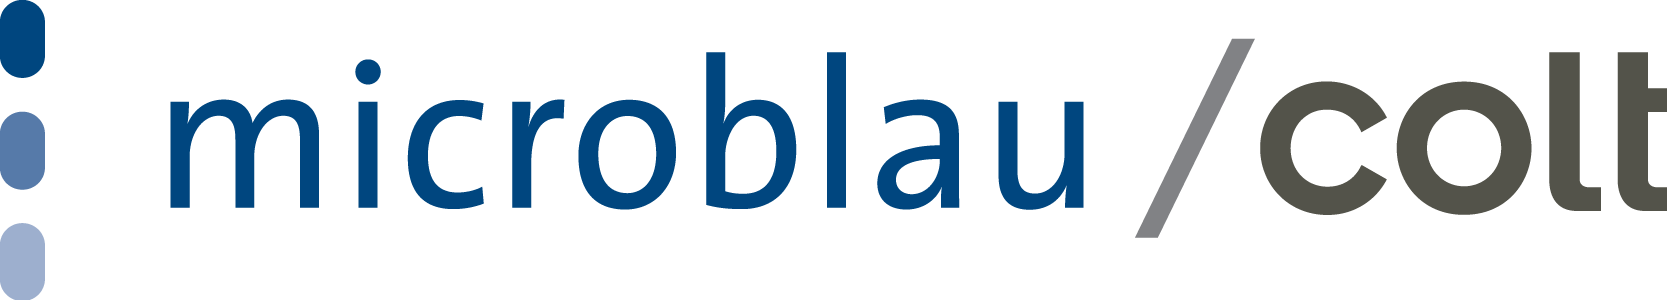 microblau/colt logo